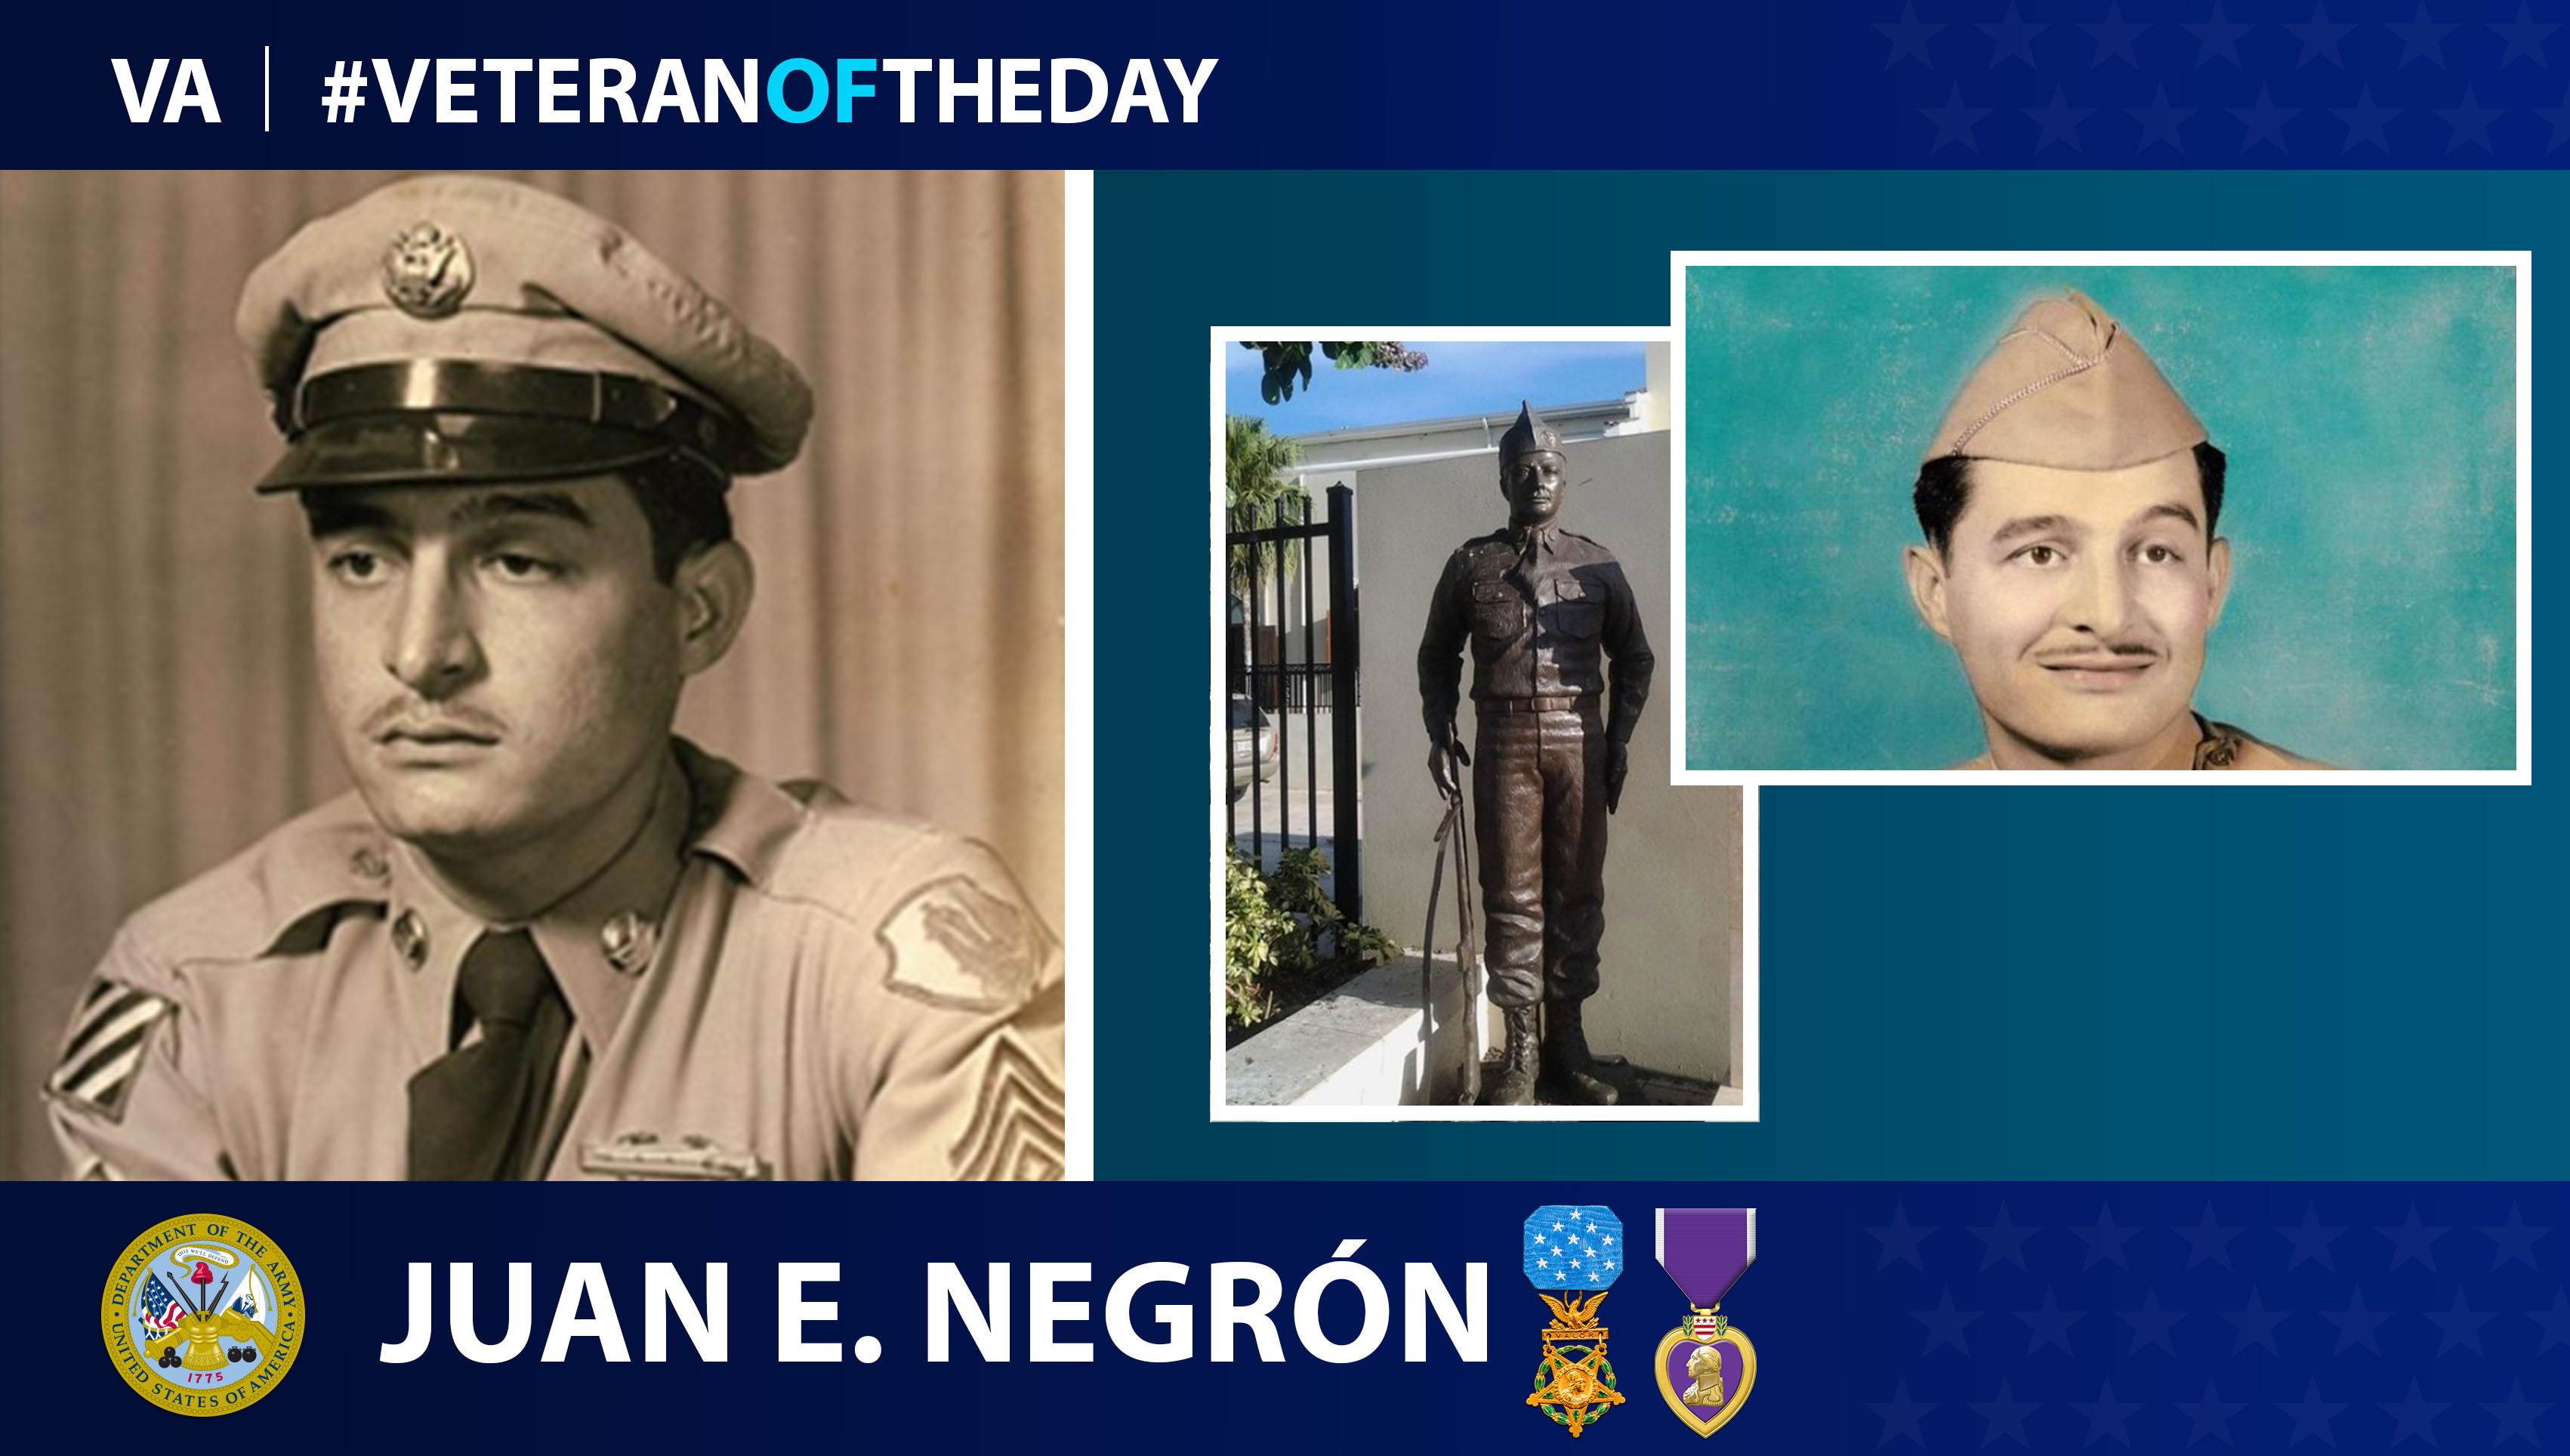 Army Veteran Juan E. Negrón is today's Veteran of the day.